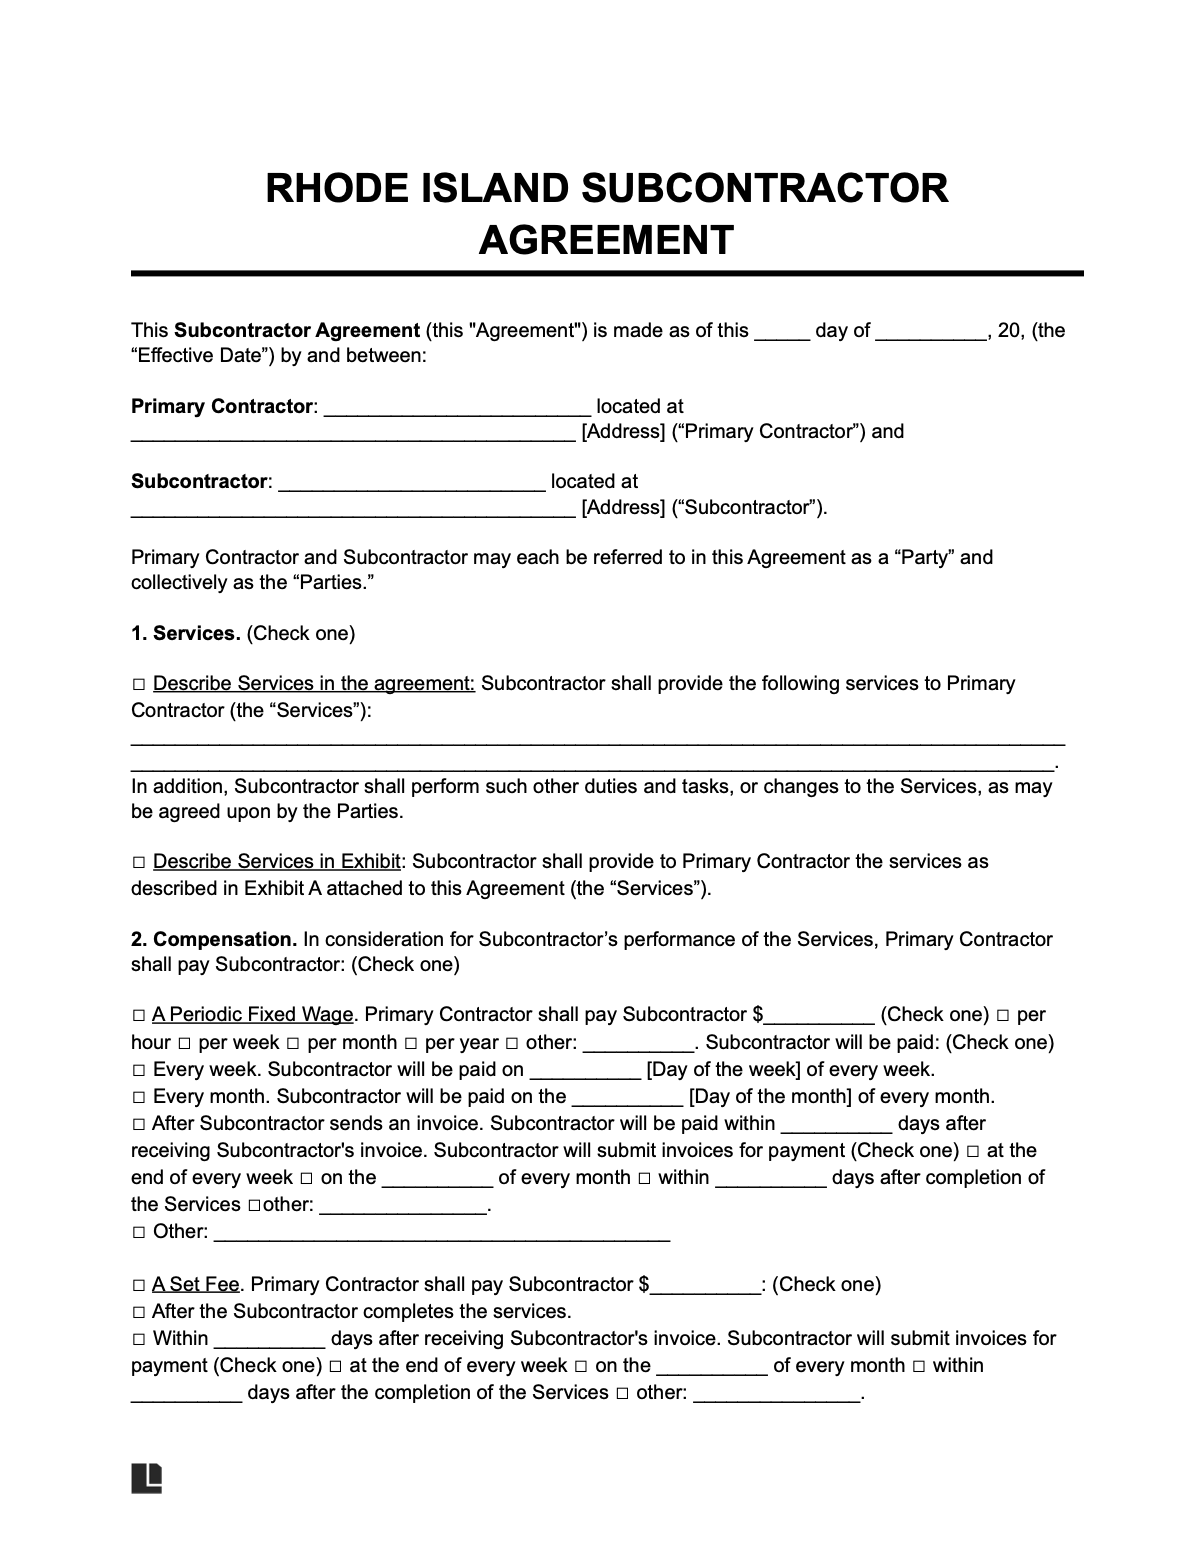 rhode island subcontractor agreement template